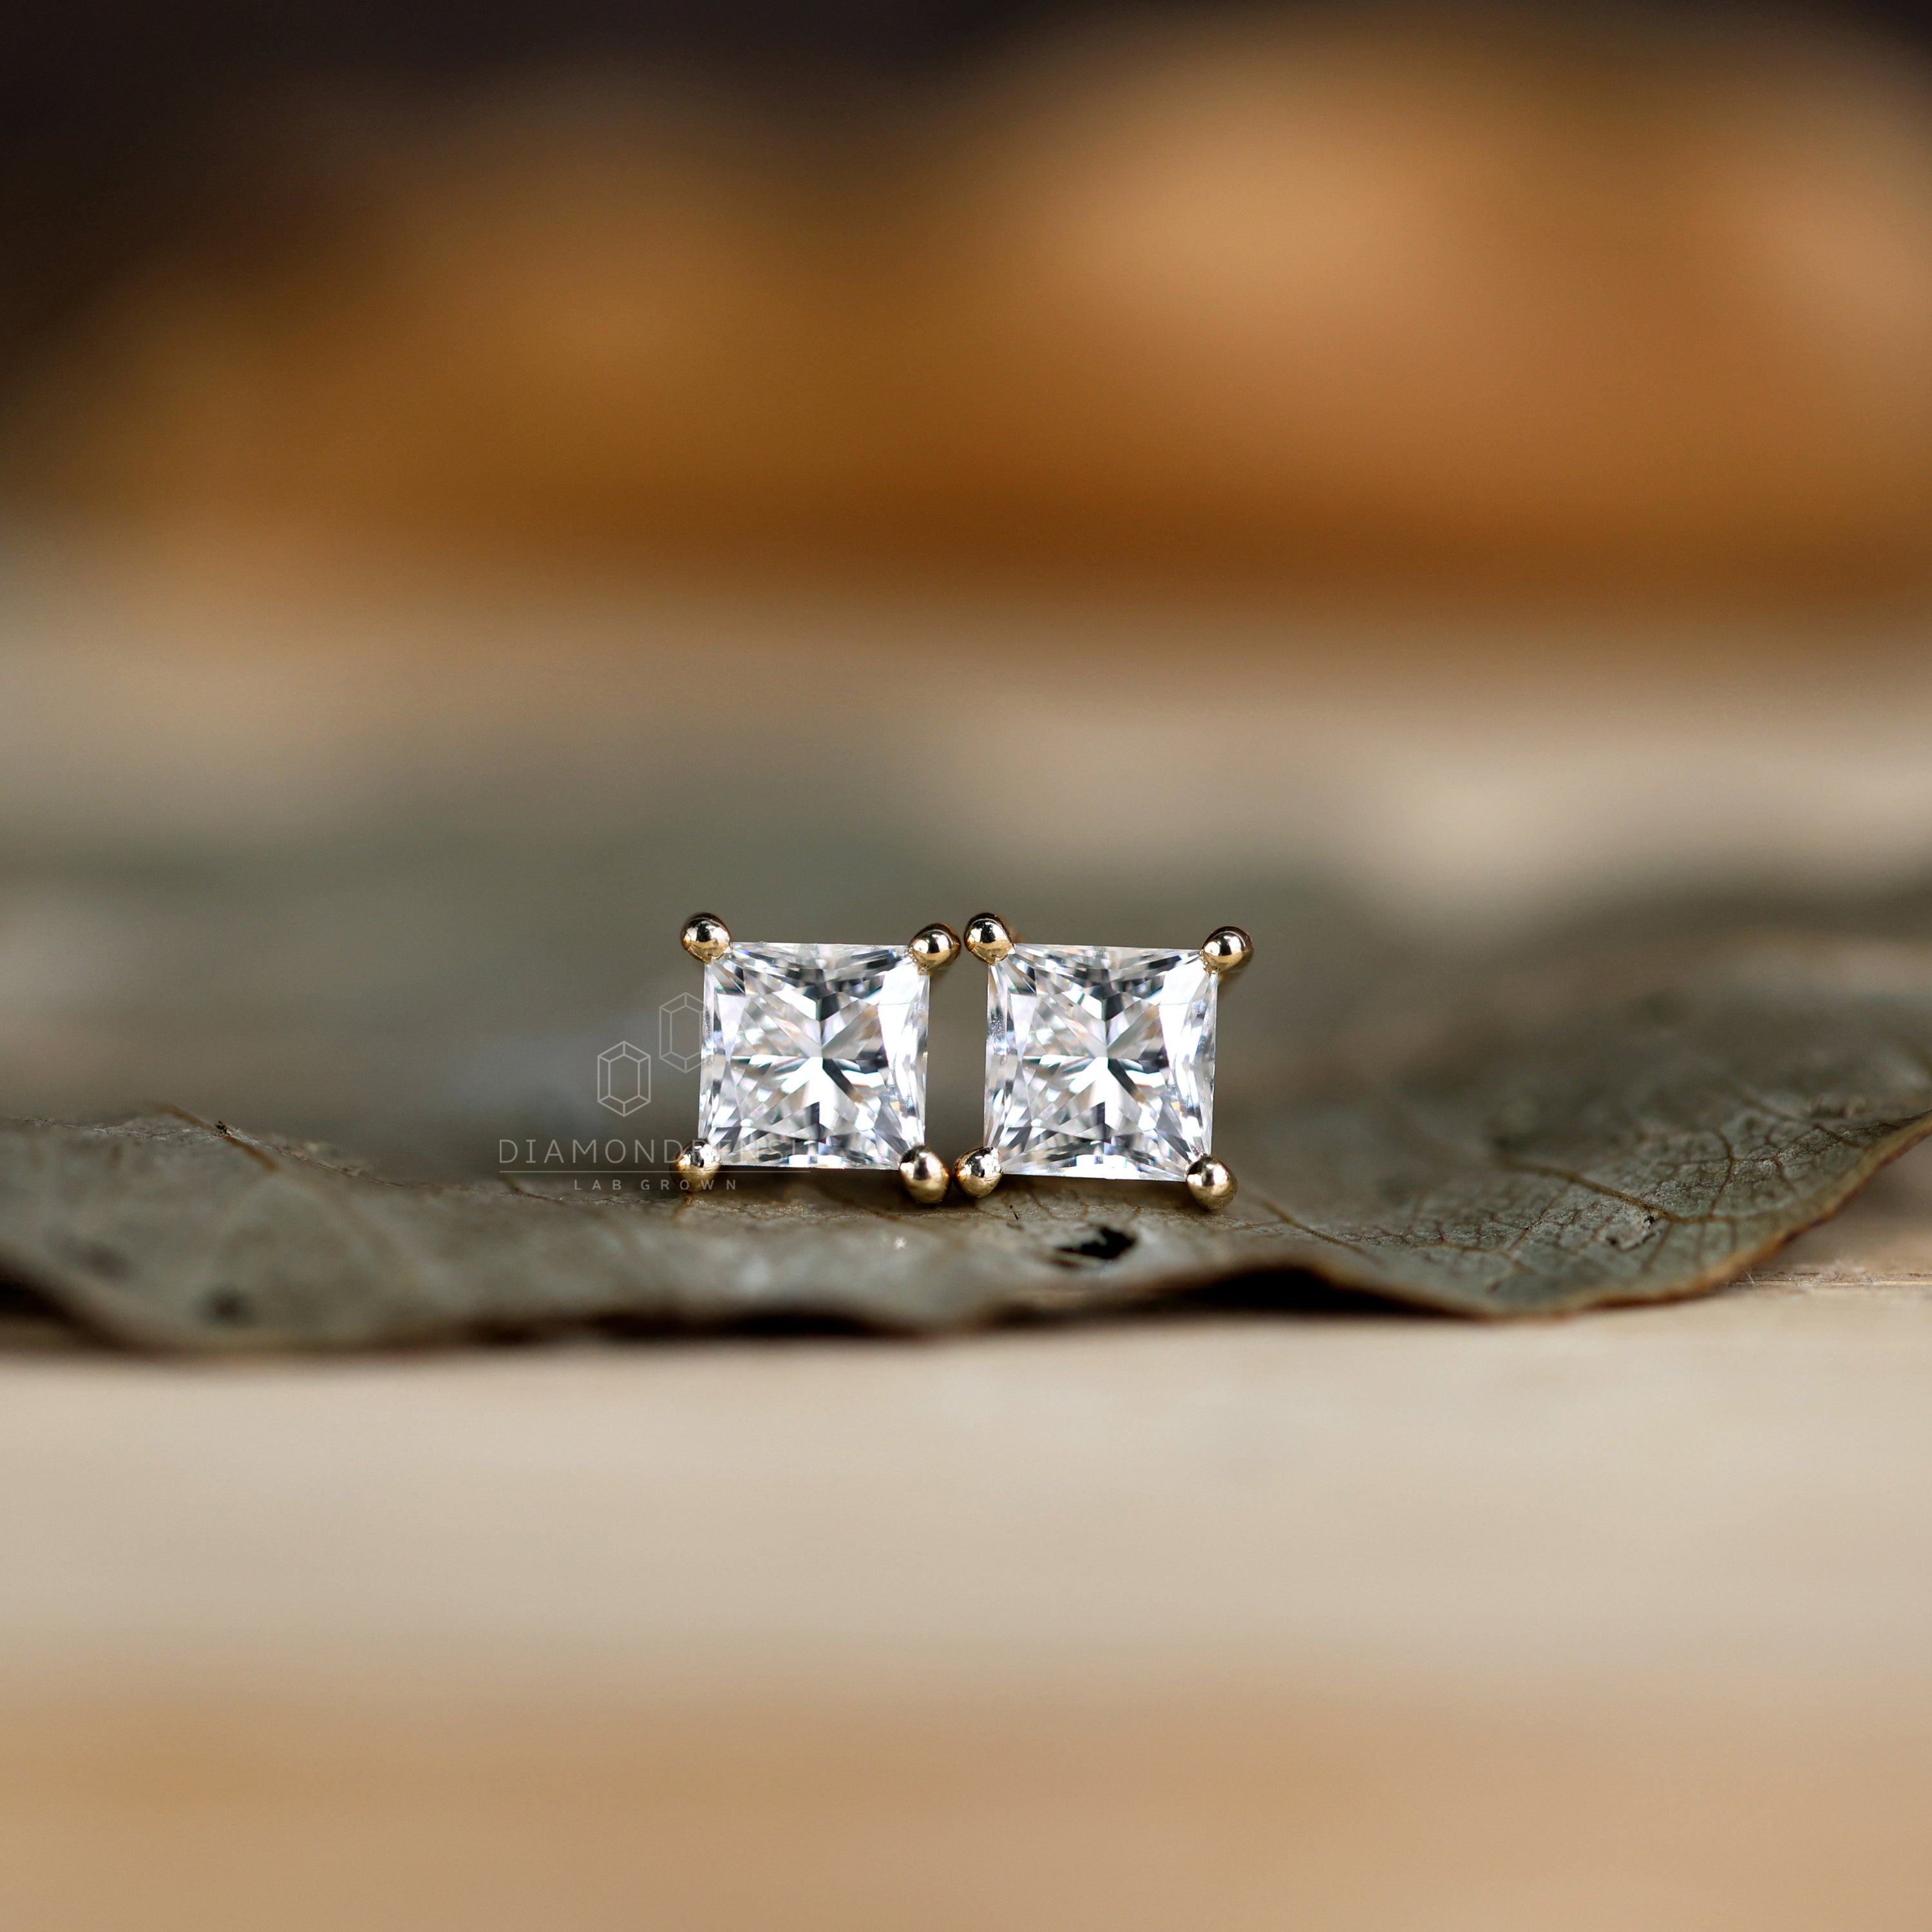 lab diamond earrings - diamondrensu